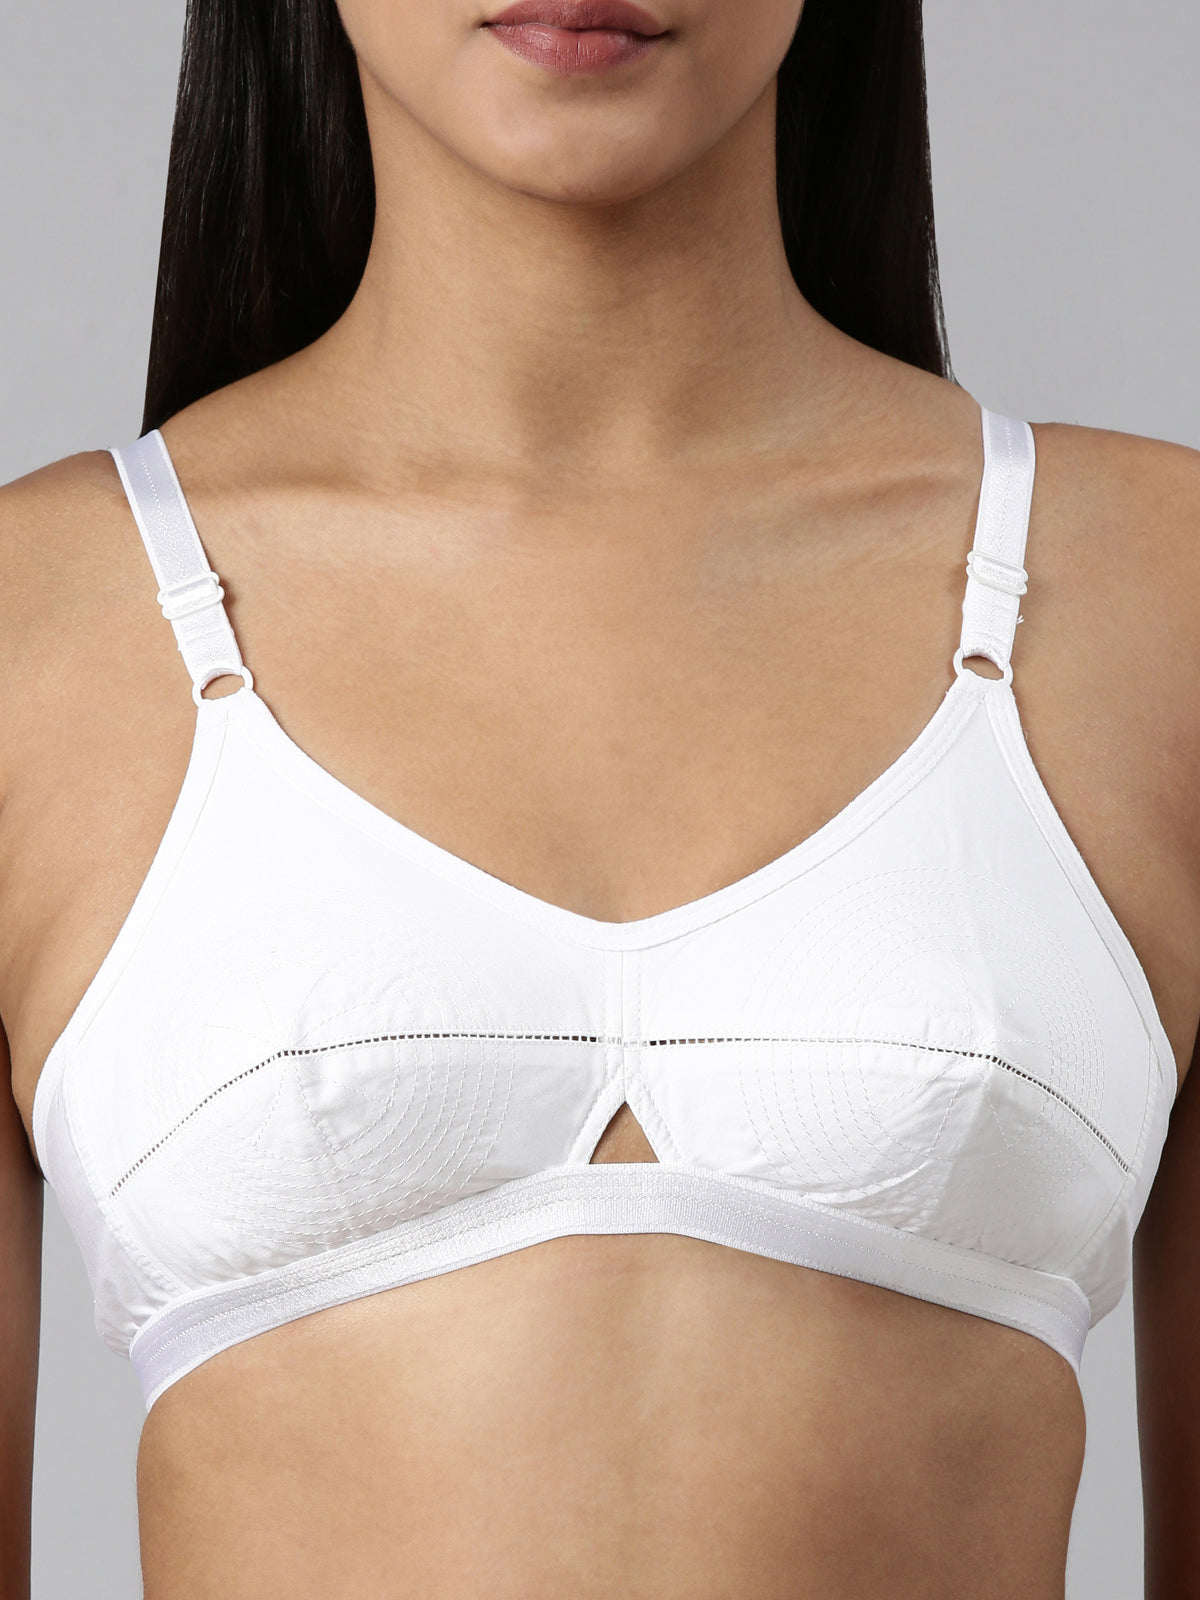 blossom-favorite bra-white1-woven cotton-everyday bra